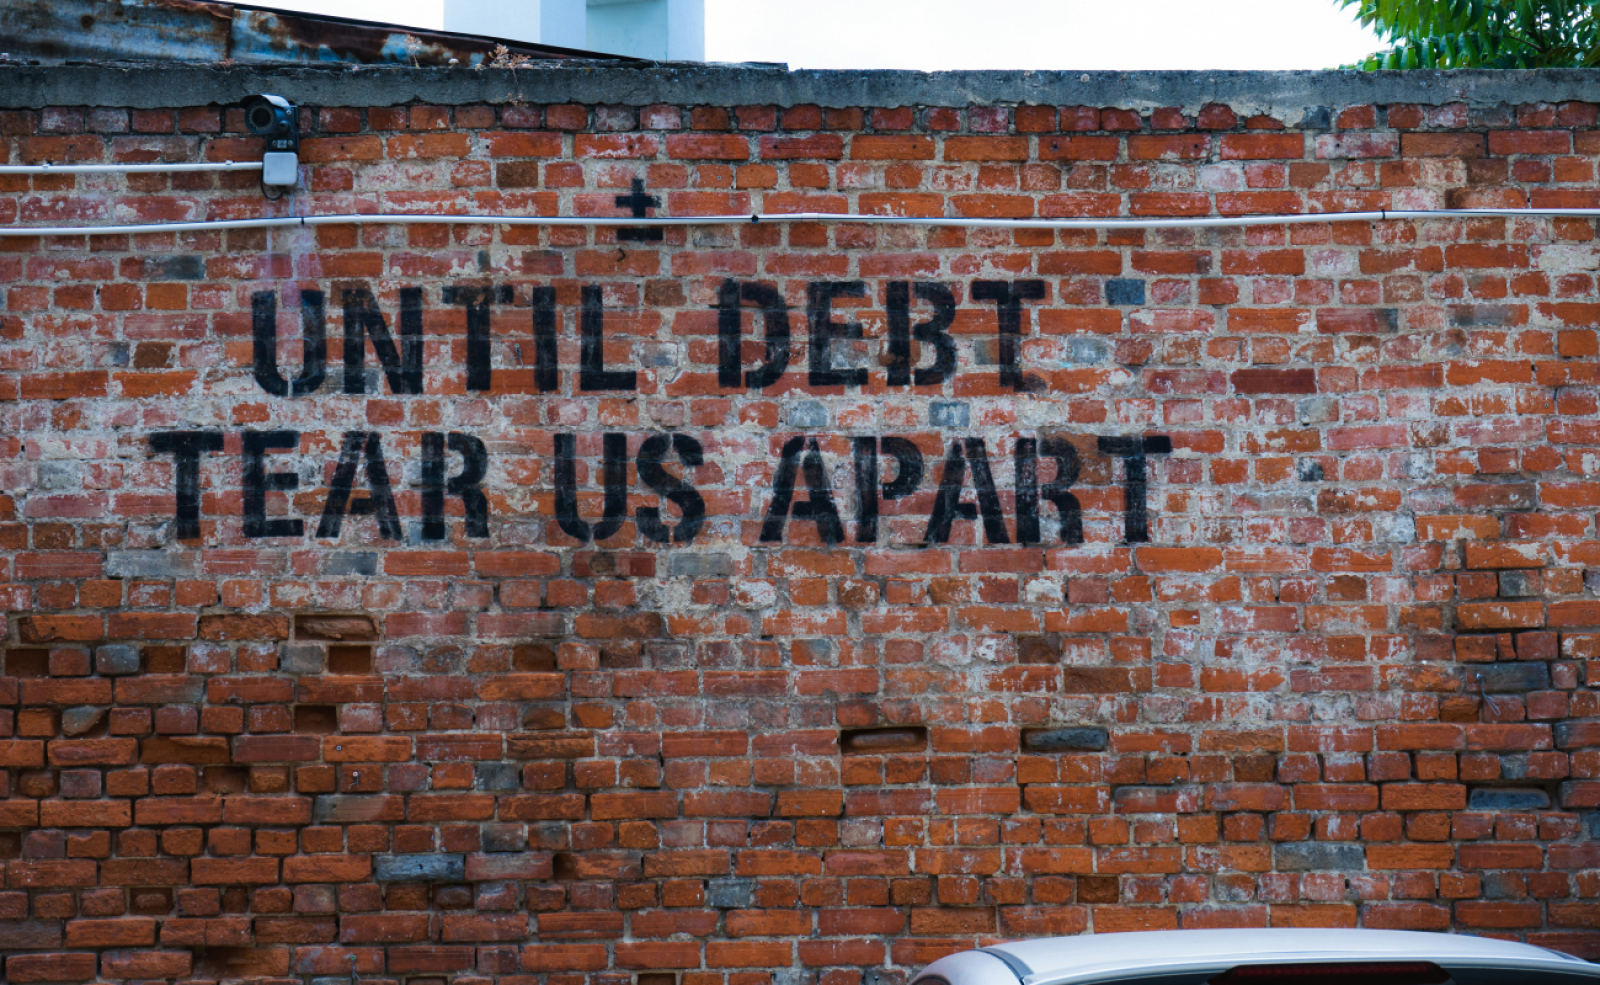 Democratic Engagement to End Debt Distress